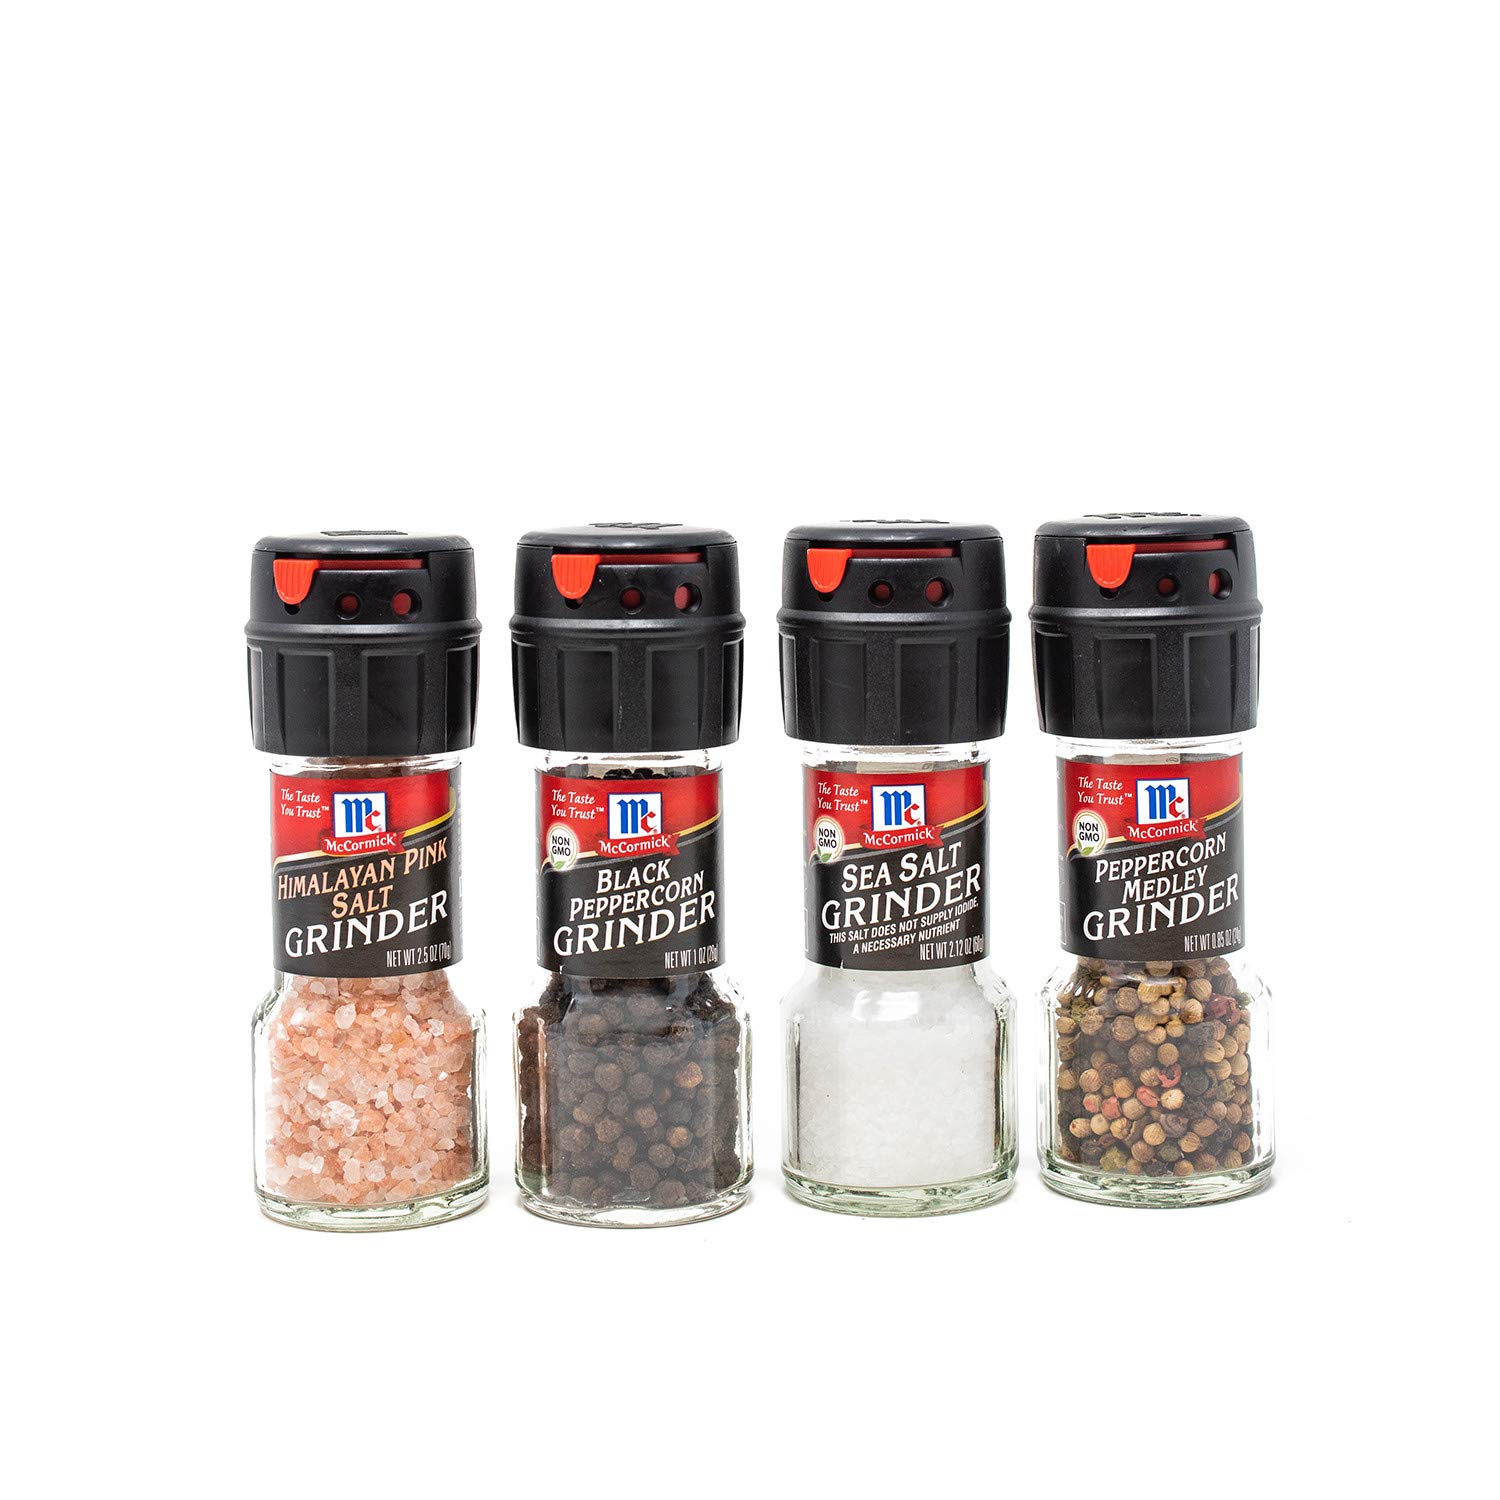 McCormick Salt & Pepper Grinder Variety Pack (Himalayan Pink Salt, Sea Salt, Black $13.6